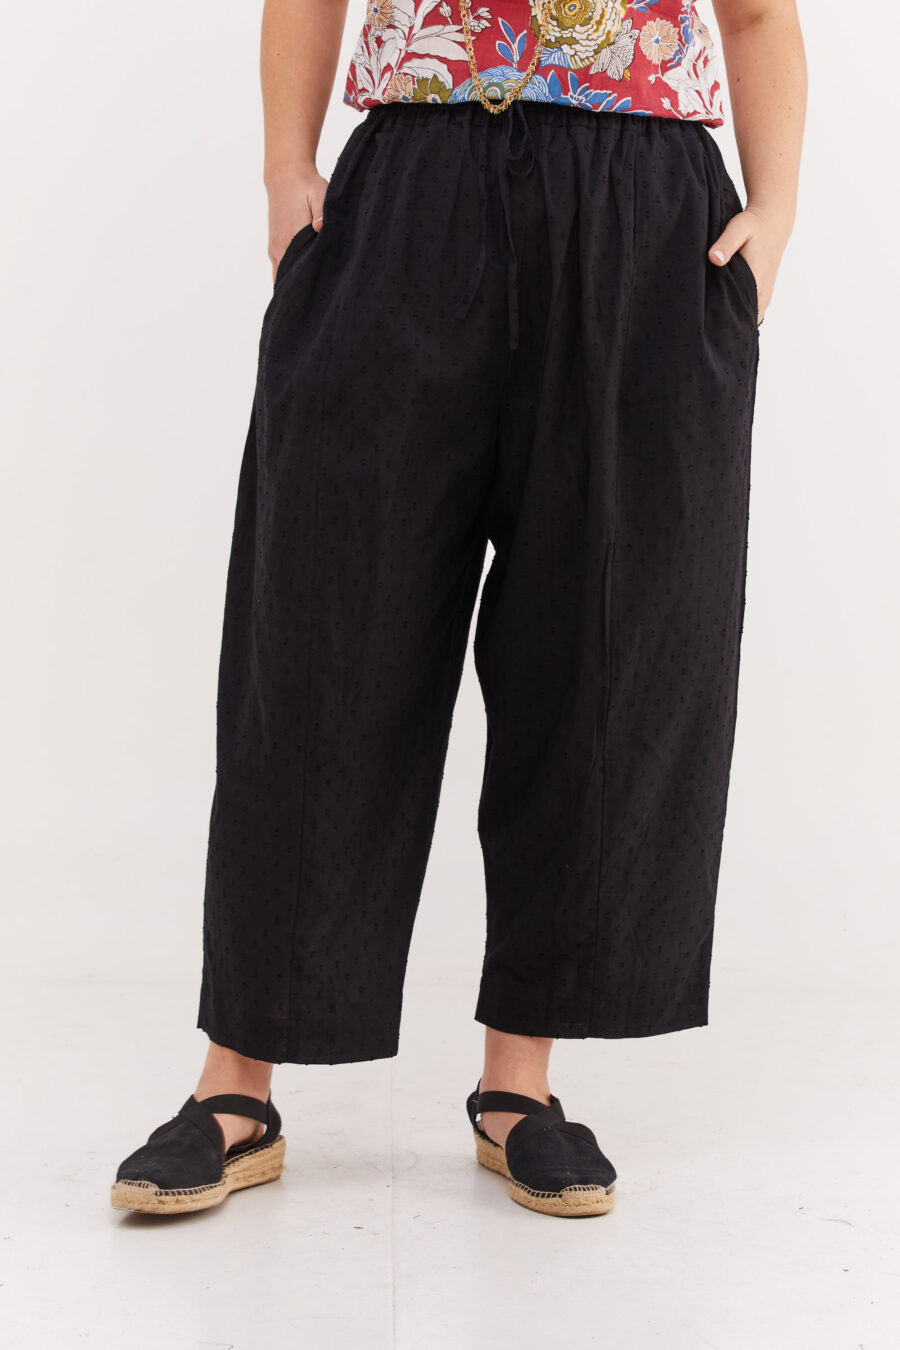 Boho chic pants| Flattering and comfortable pants – Black pants with textured black circles